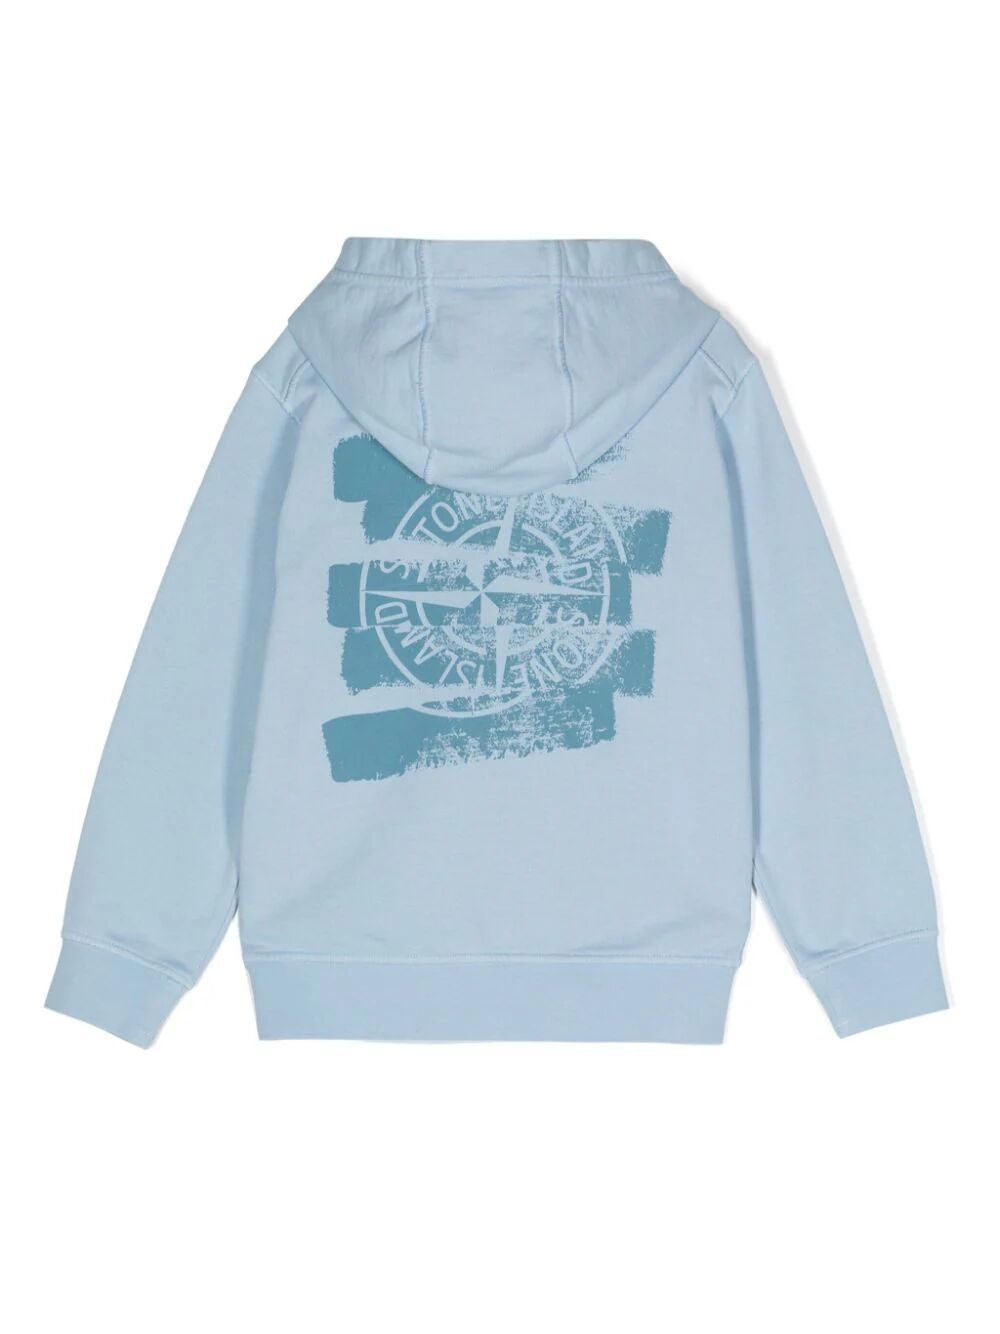 Shop Stone Island Junior Sweatshirt In Blue